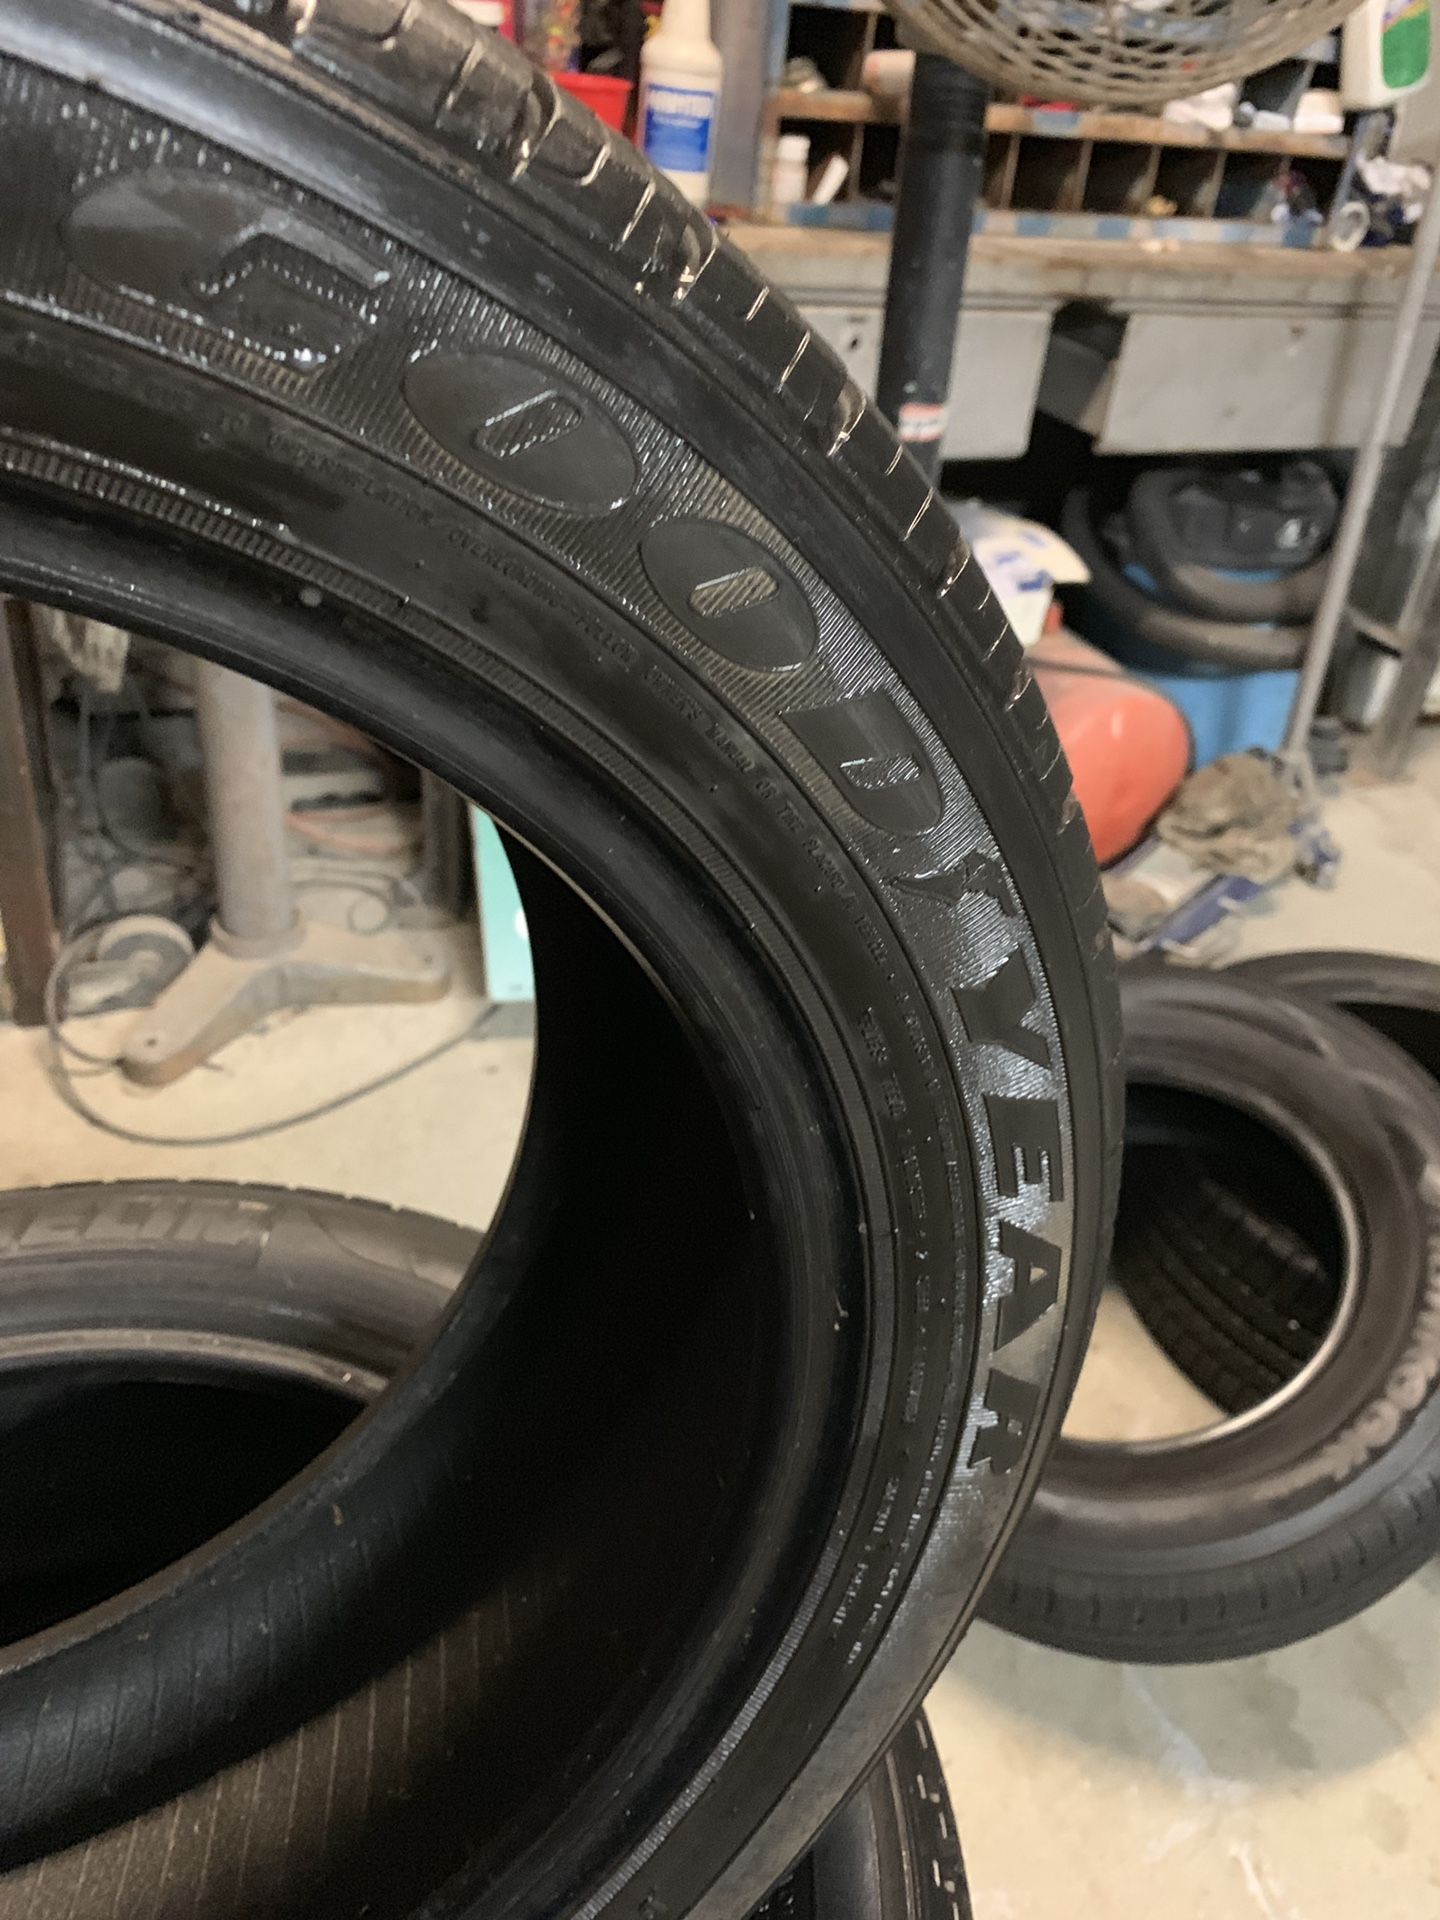 215-50-17 good used tire 🤙🏽🤙🏽